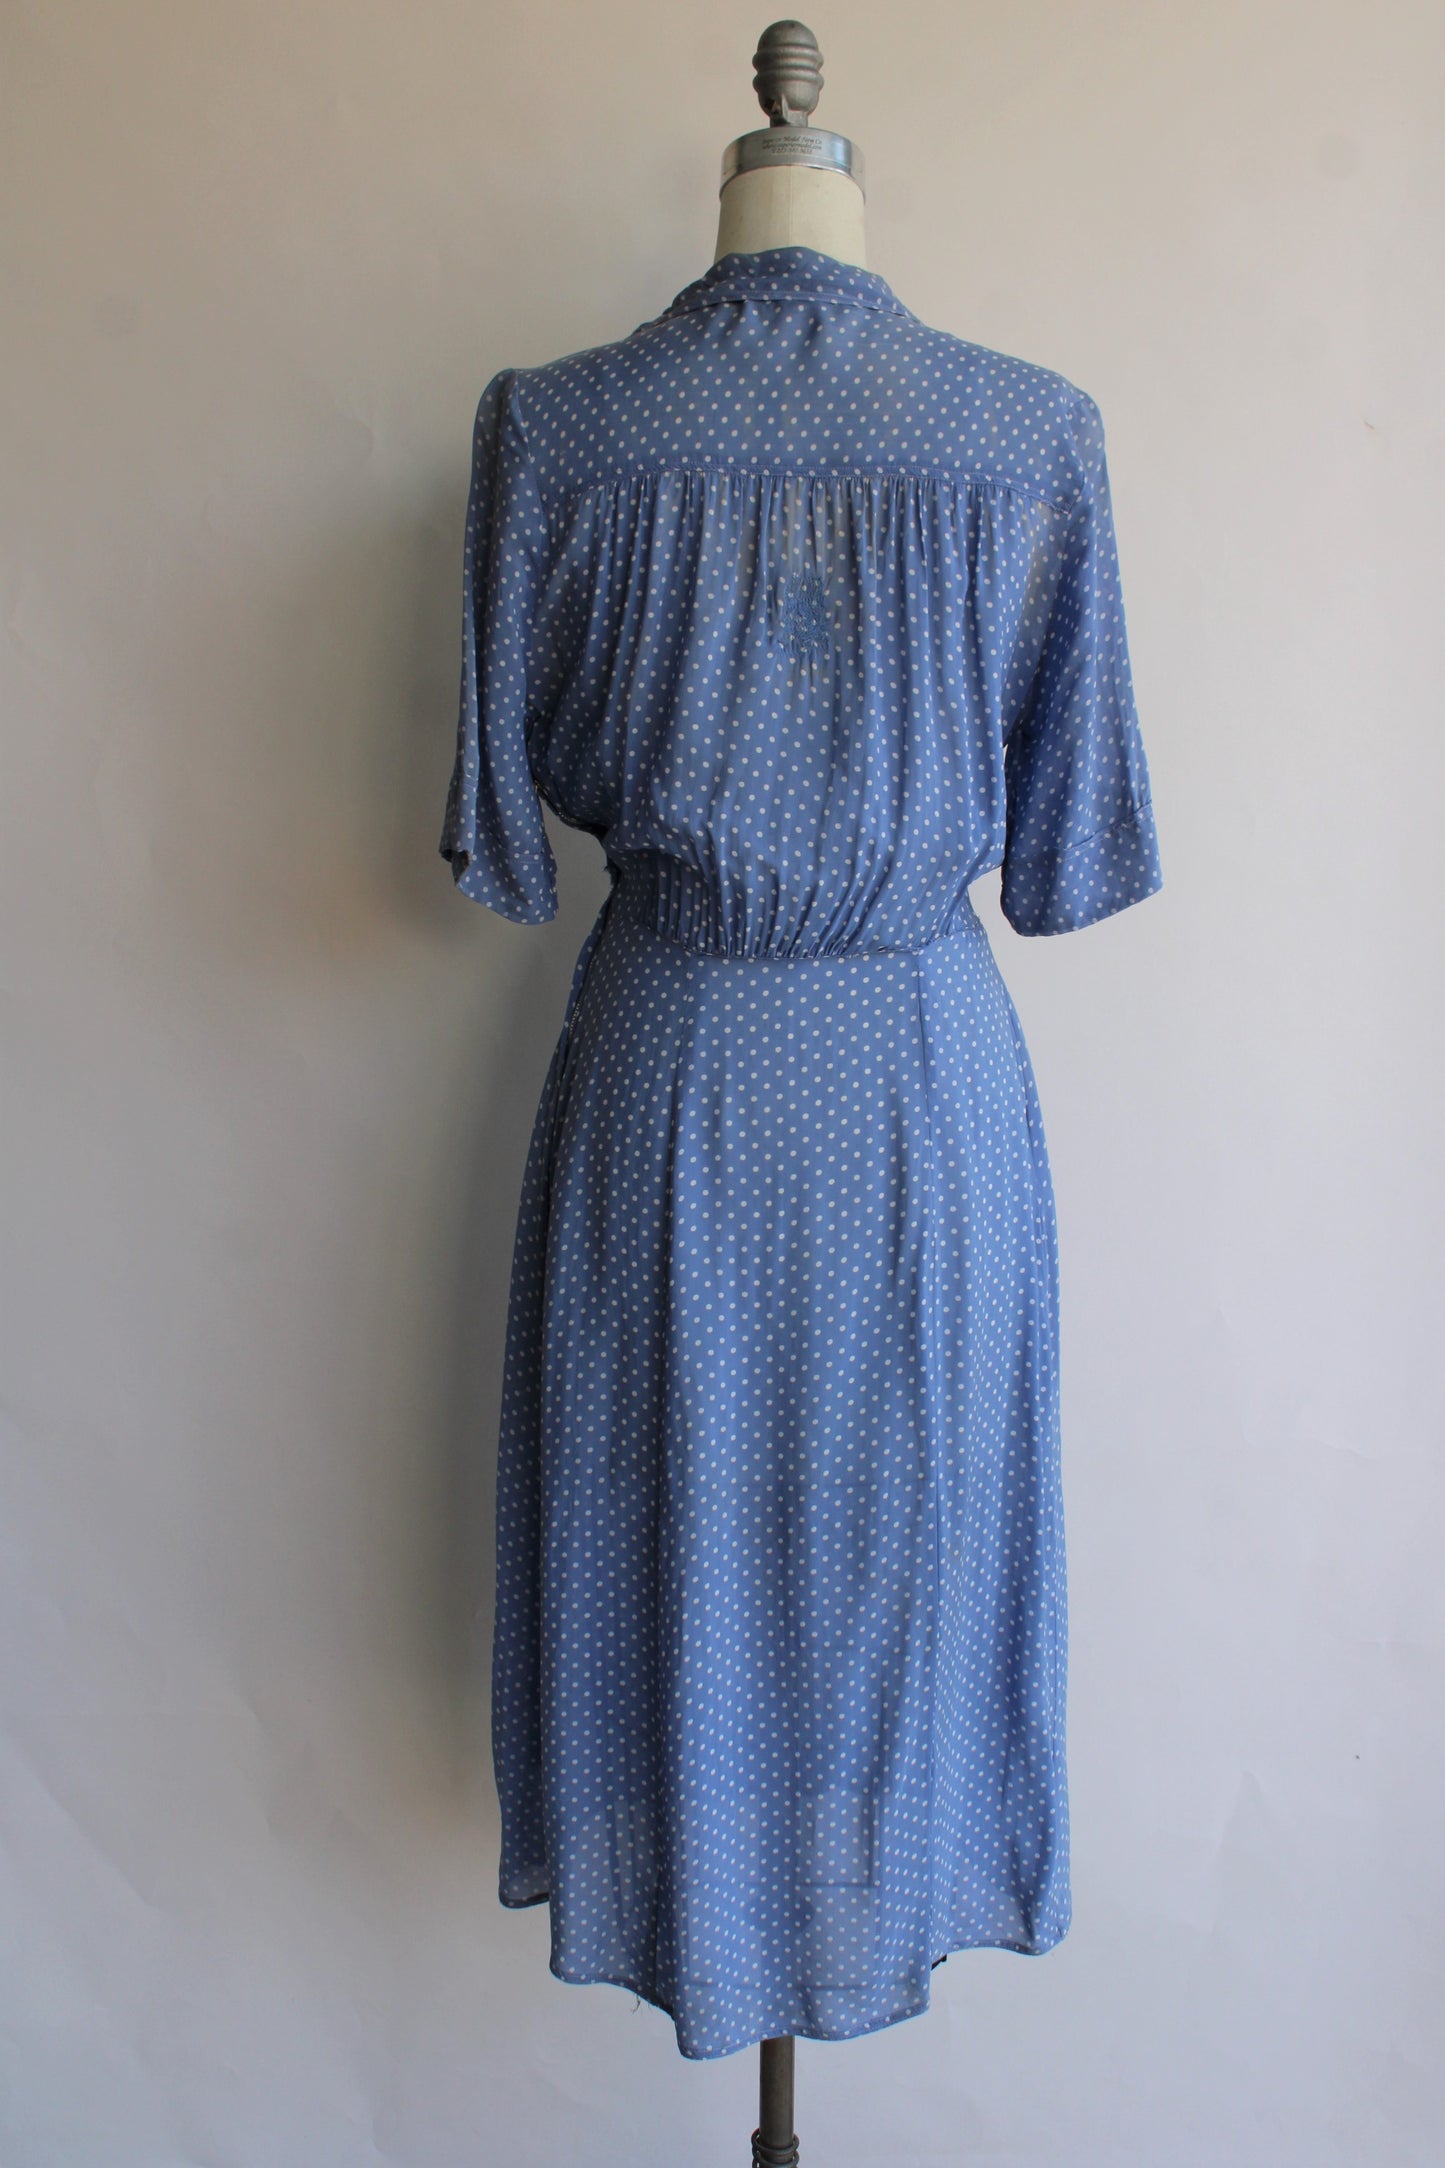 Vintage 1940s Blue and White Polka Dot Rayon Dress